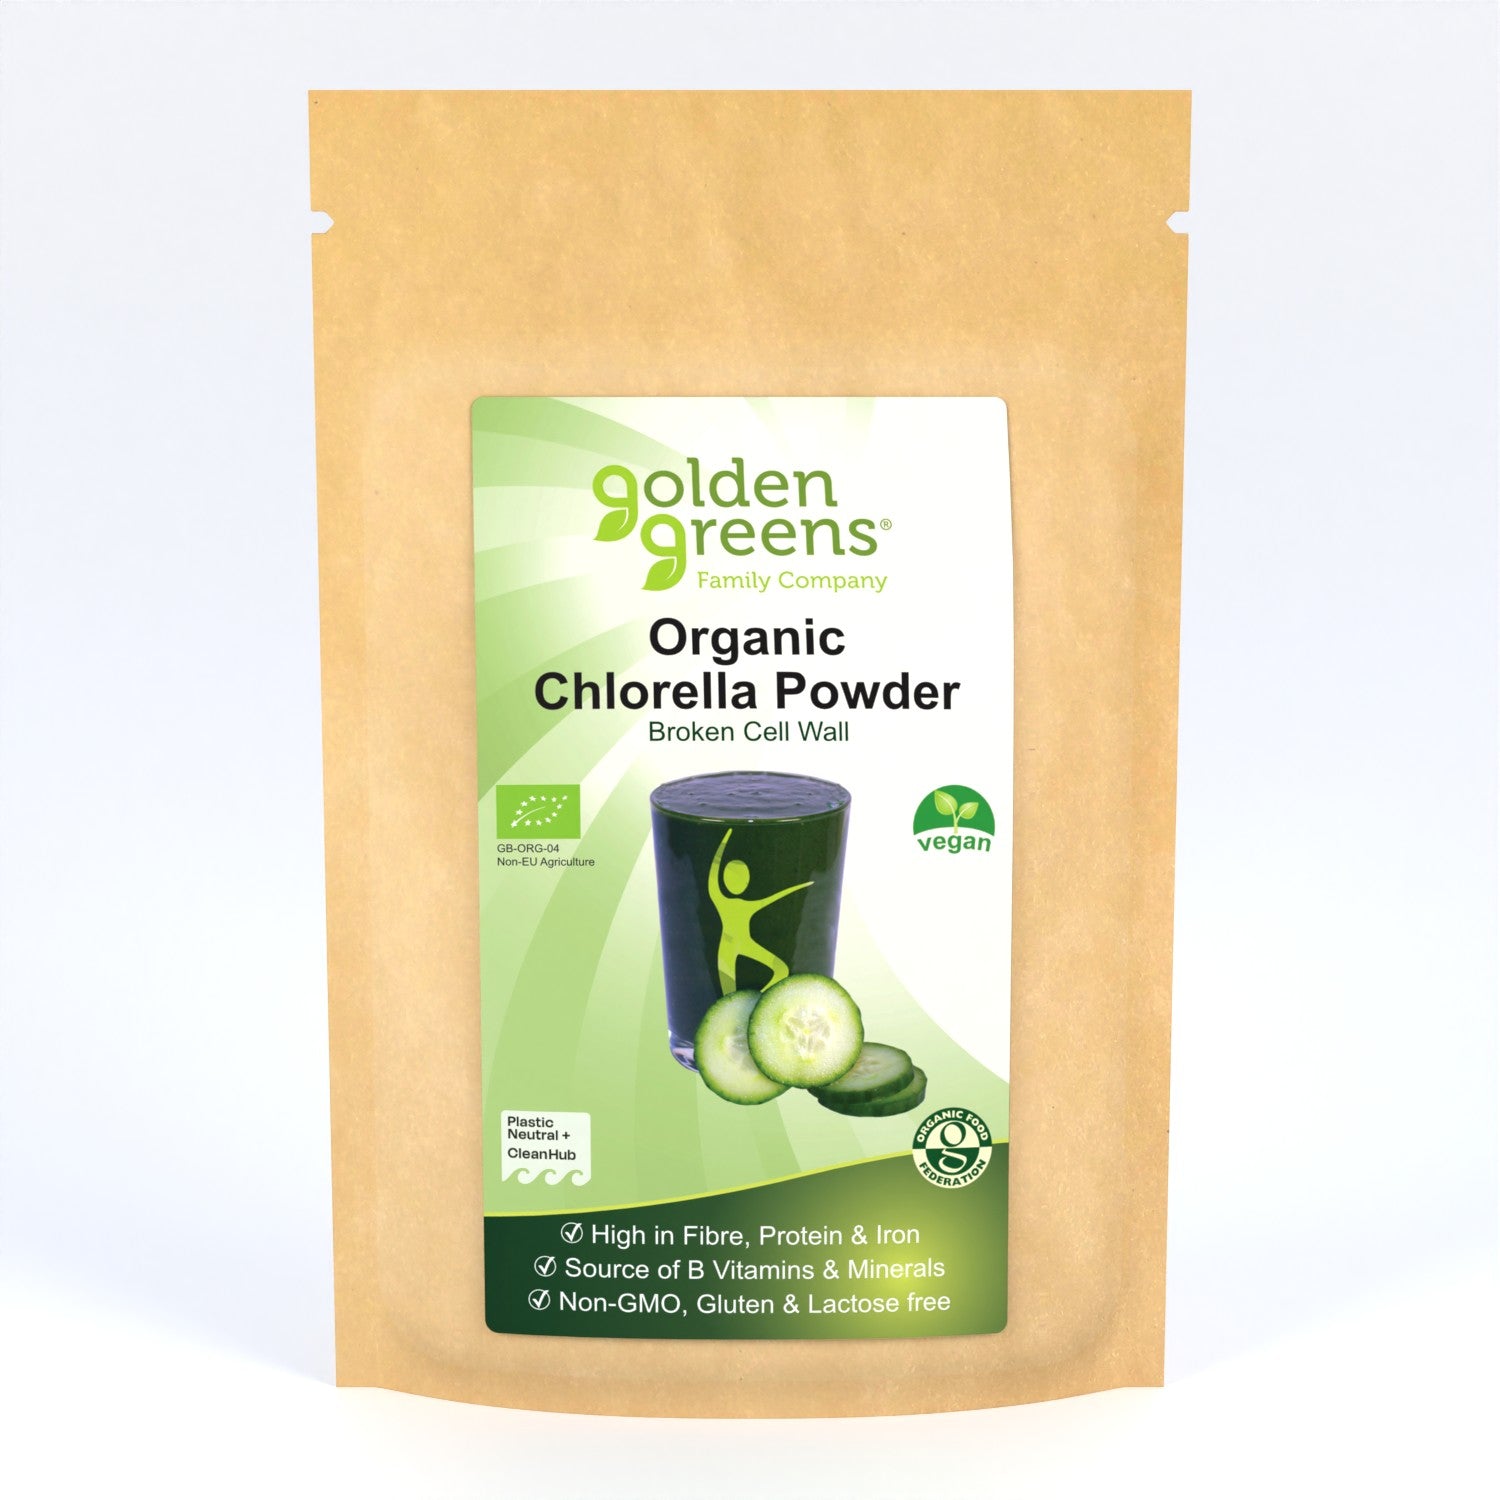 View Organic Chlorella Powder information